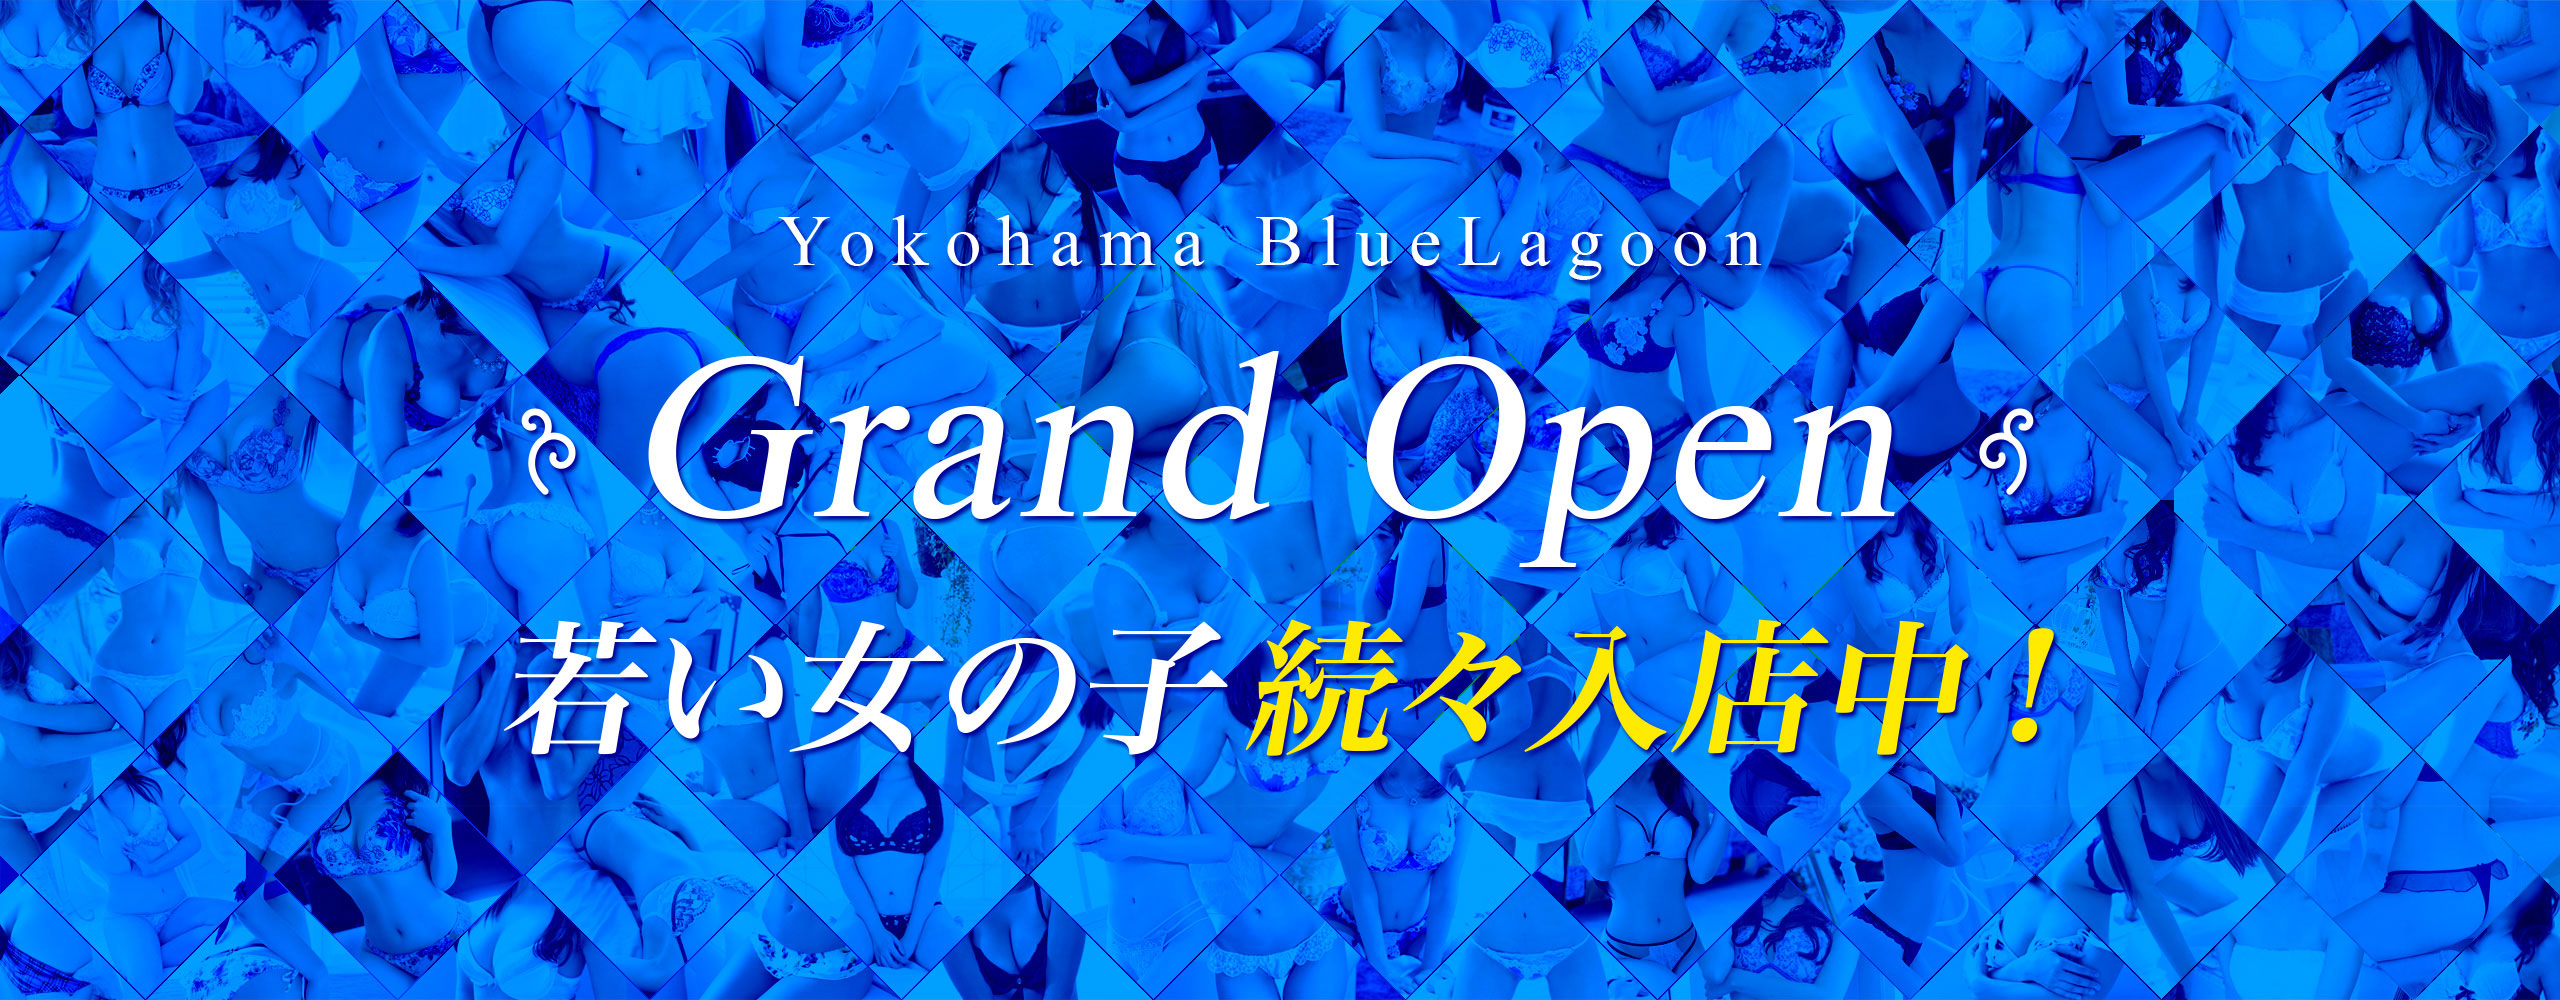 Yokohama BlueLagoon Grand Open 若い女の子続々入店中!